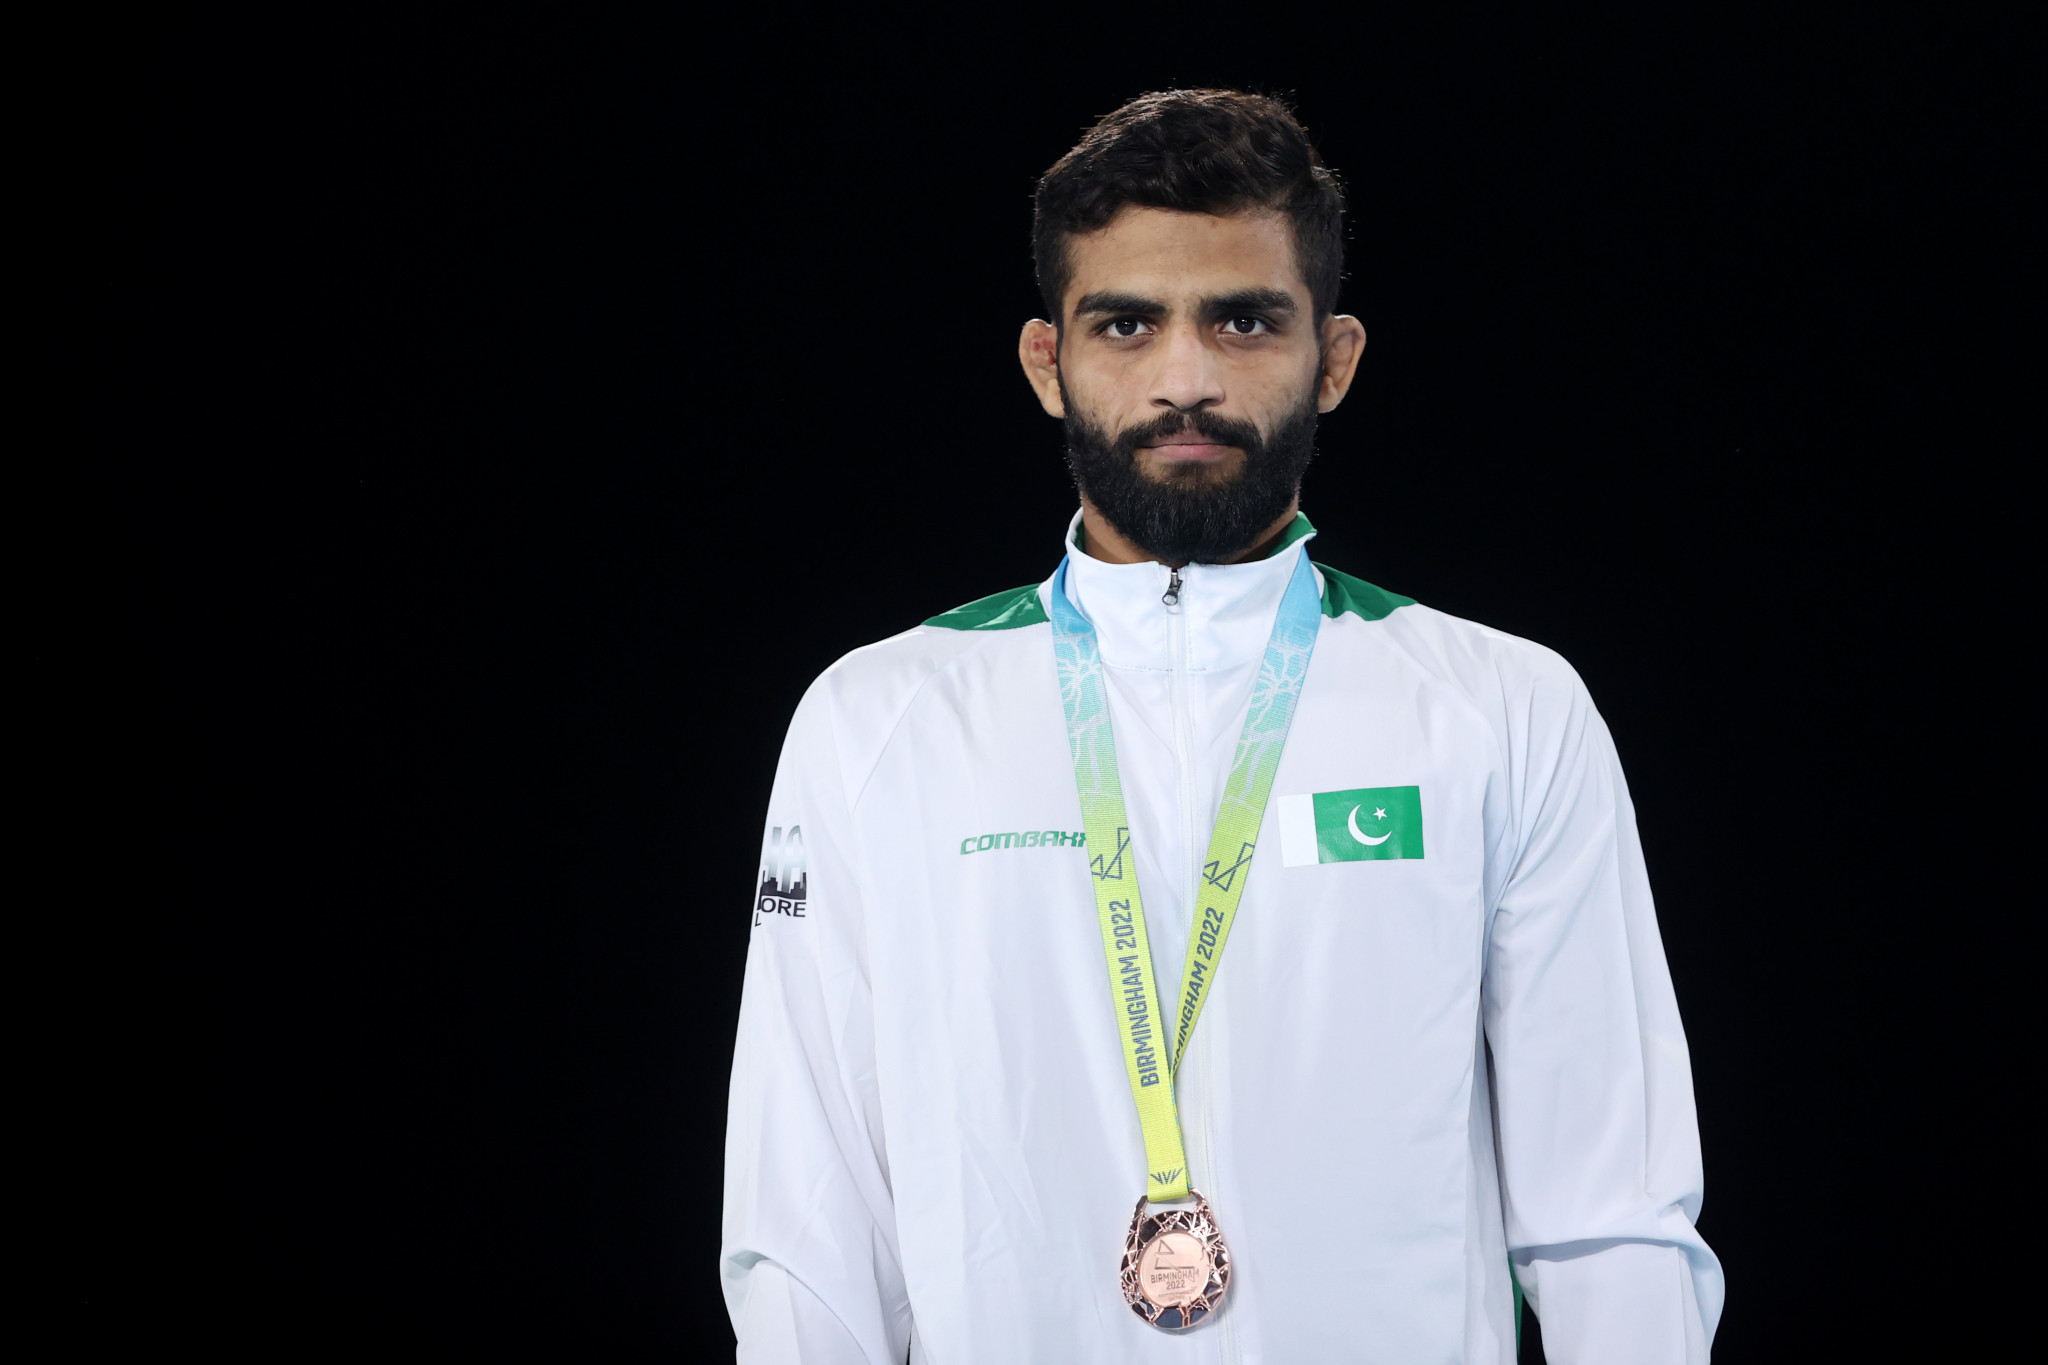 Pakistan's Commonwealth Games wrestling medallist Asad suspended over failed drugs test